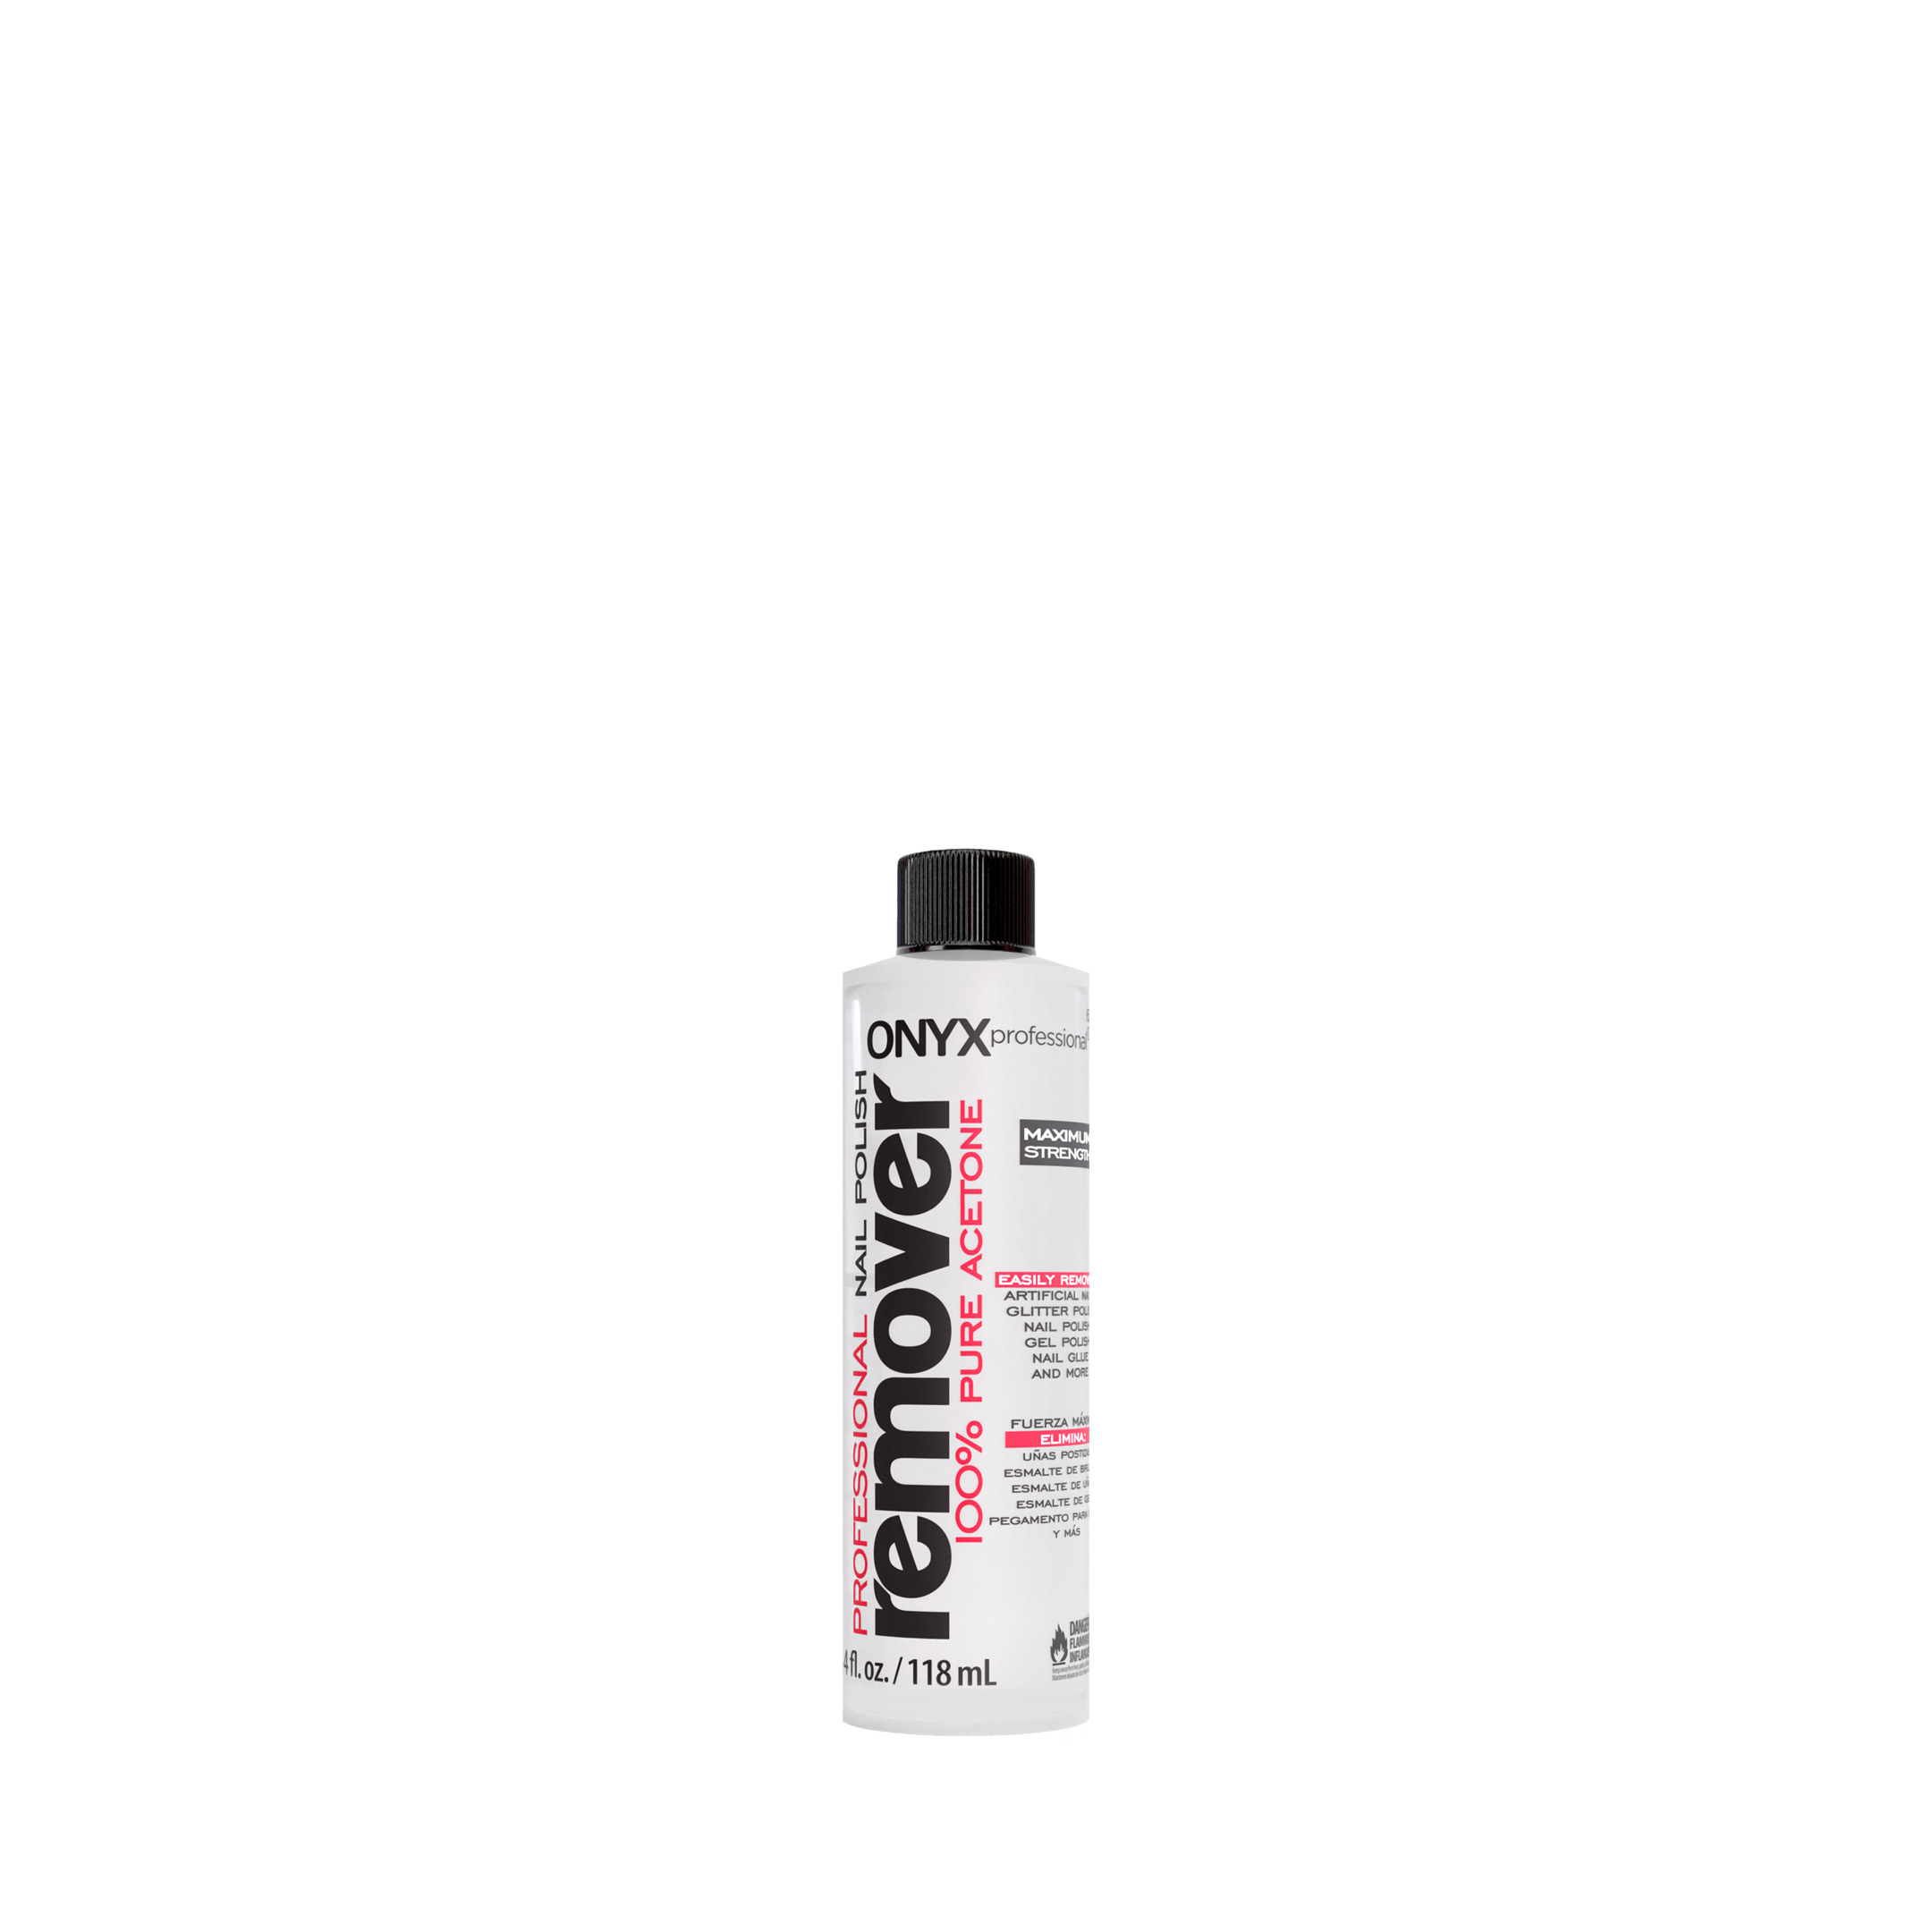 Onyx Professional 100% Pure Acetone Nail Polish Remover, 4 fl oz - image 1 of 5